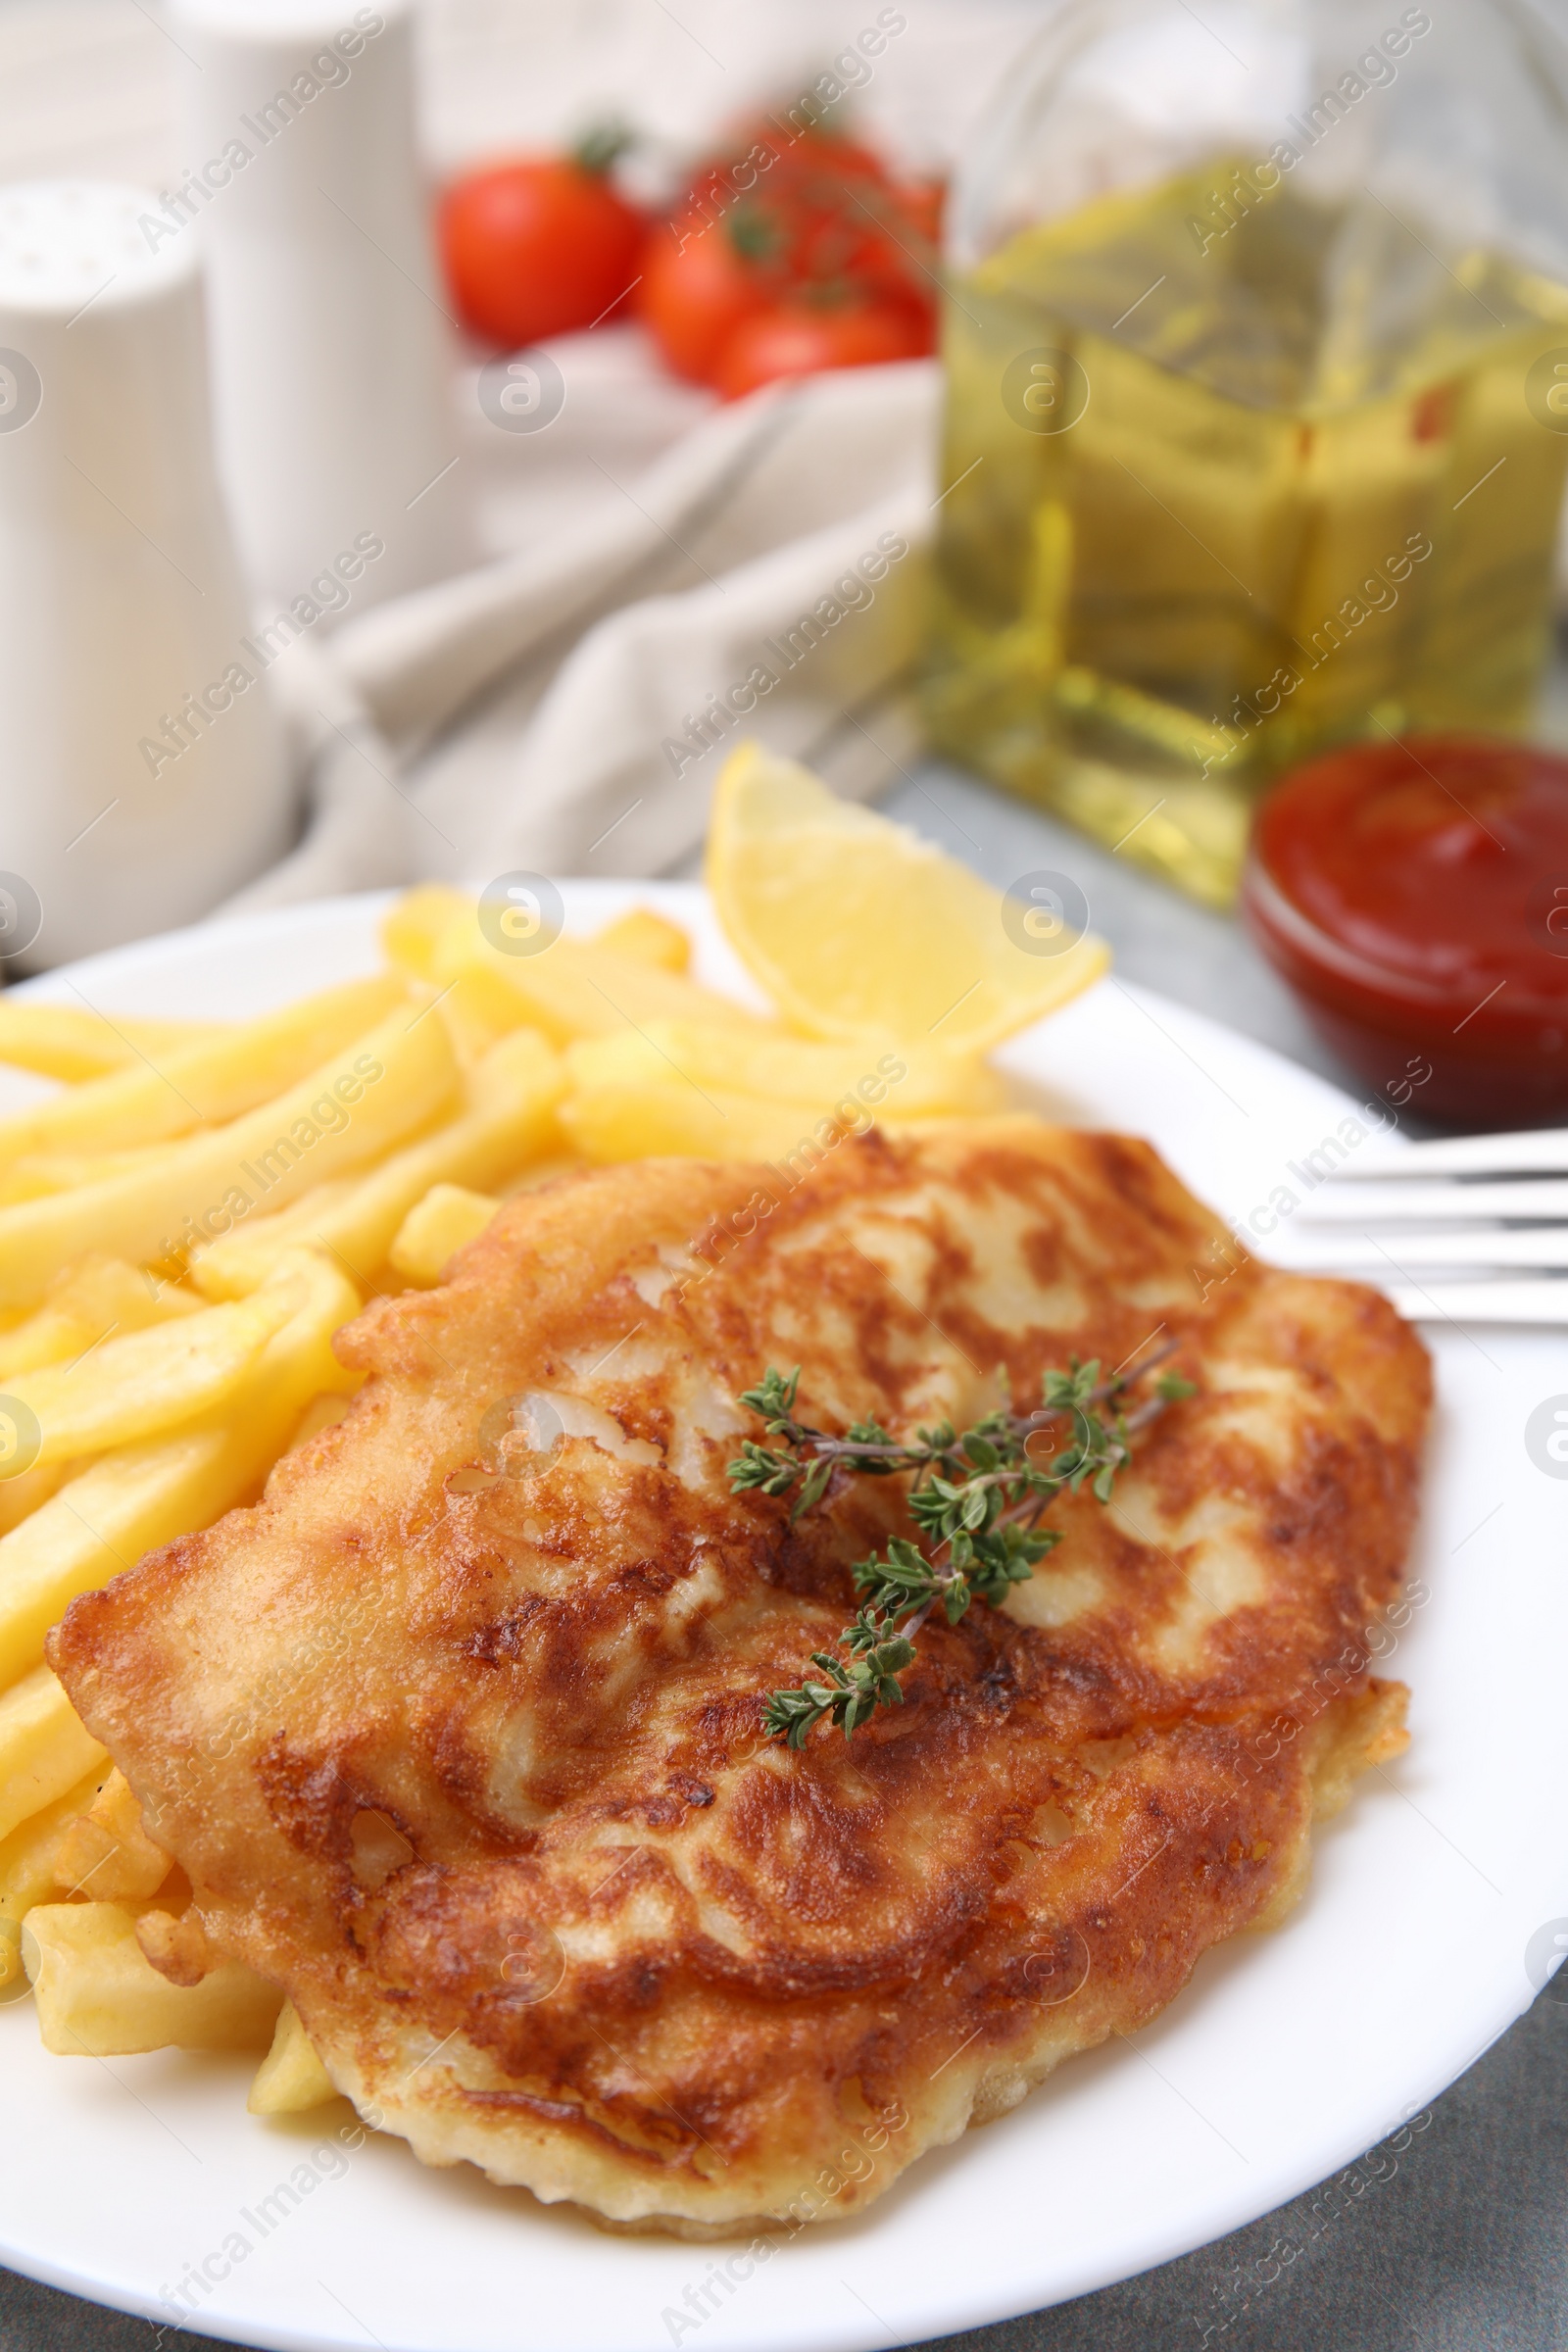 Photo of Tasty soda water battered fish, potato chips and lemon slice on light grey table